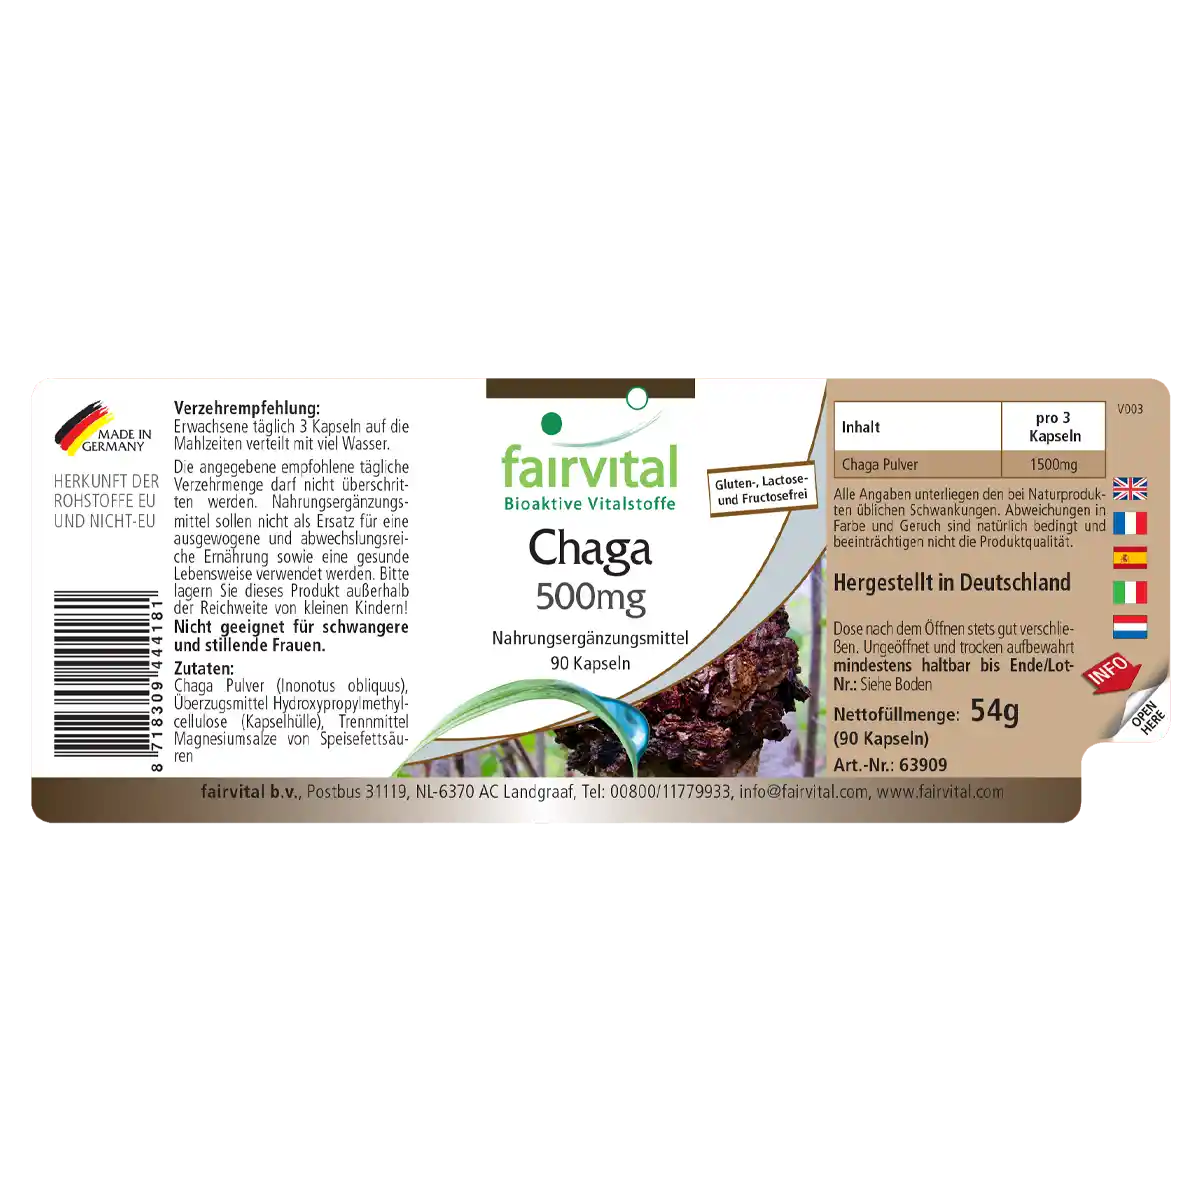 Chaga – fungo medicinale 500mg – 90 capsule